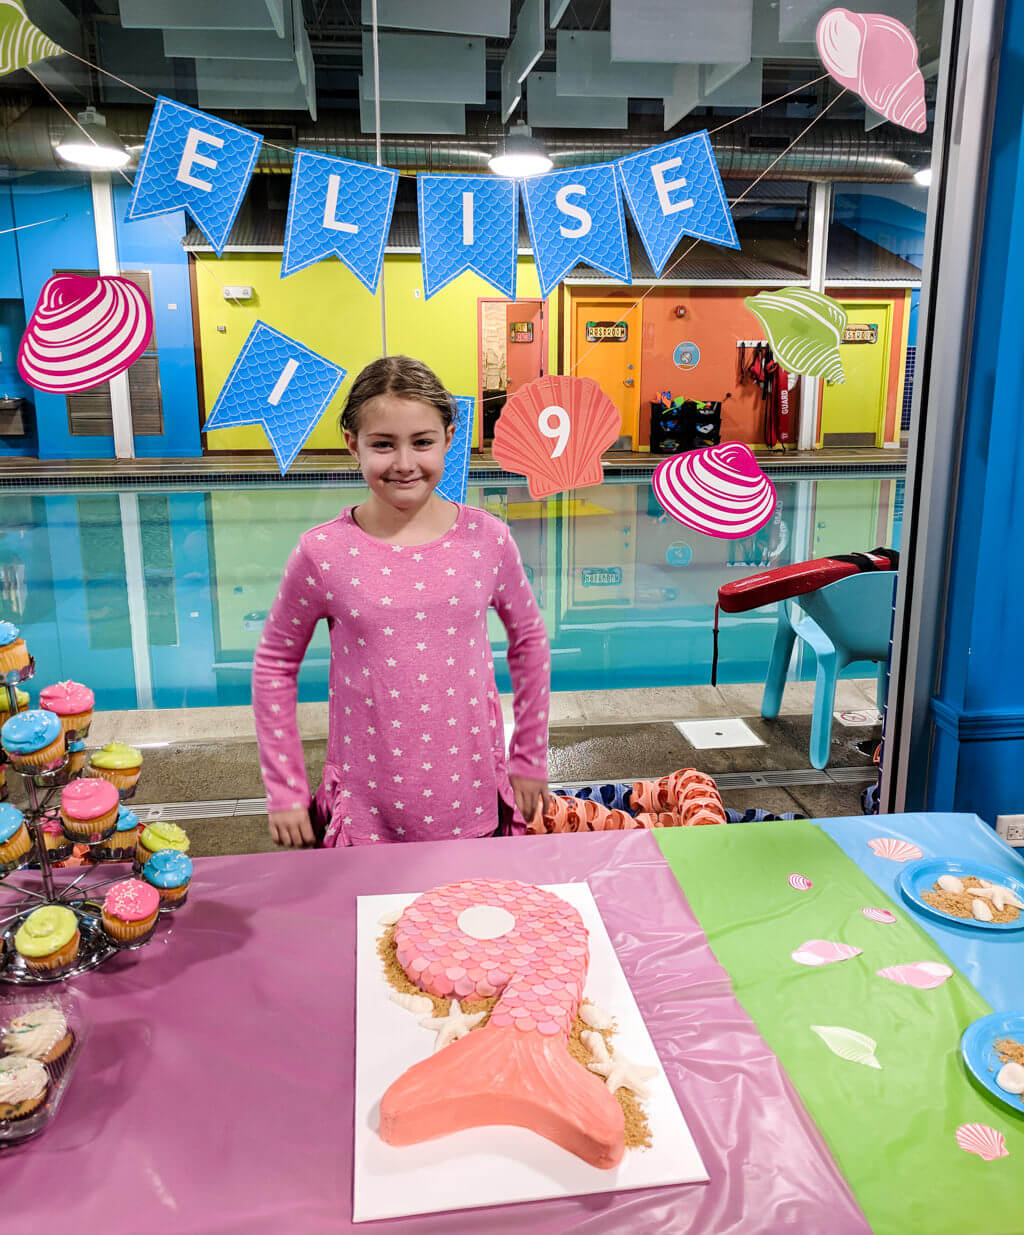 Elise with mermaid birthday cake and happy birthday banner